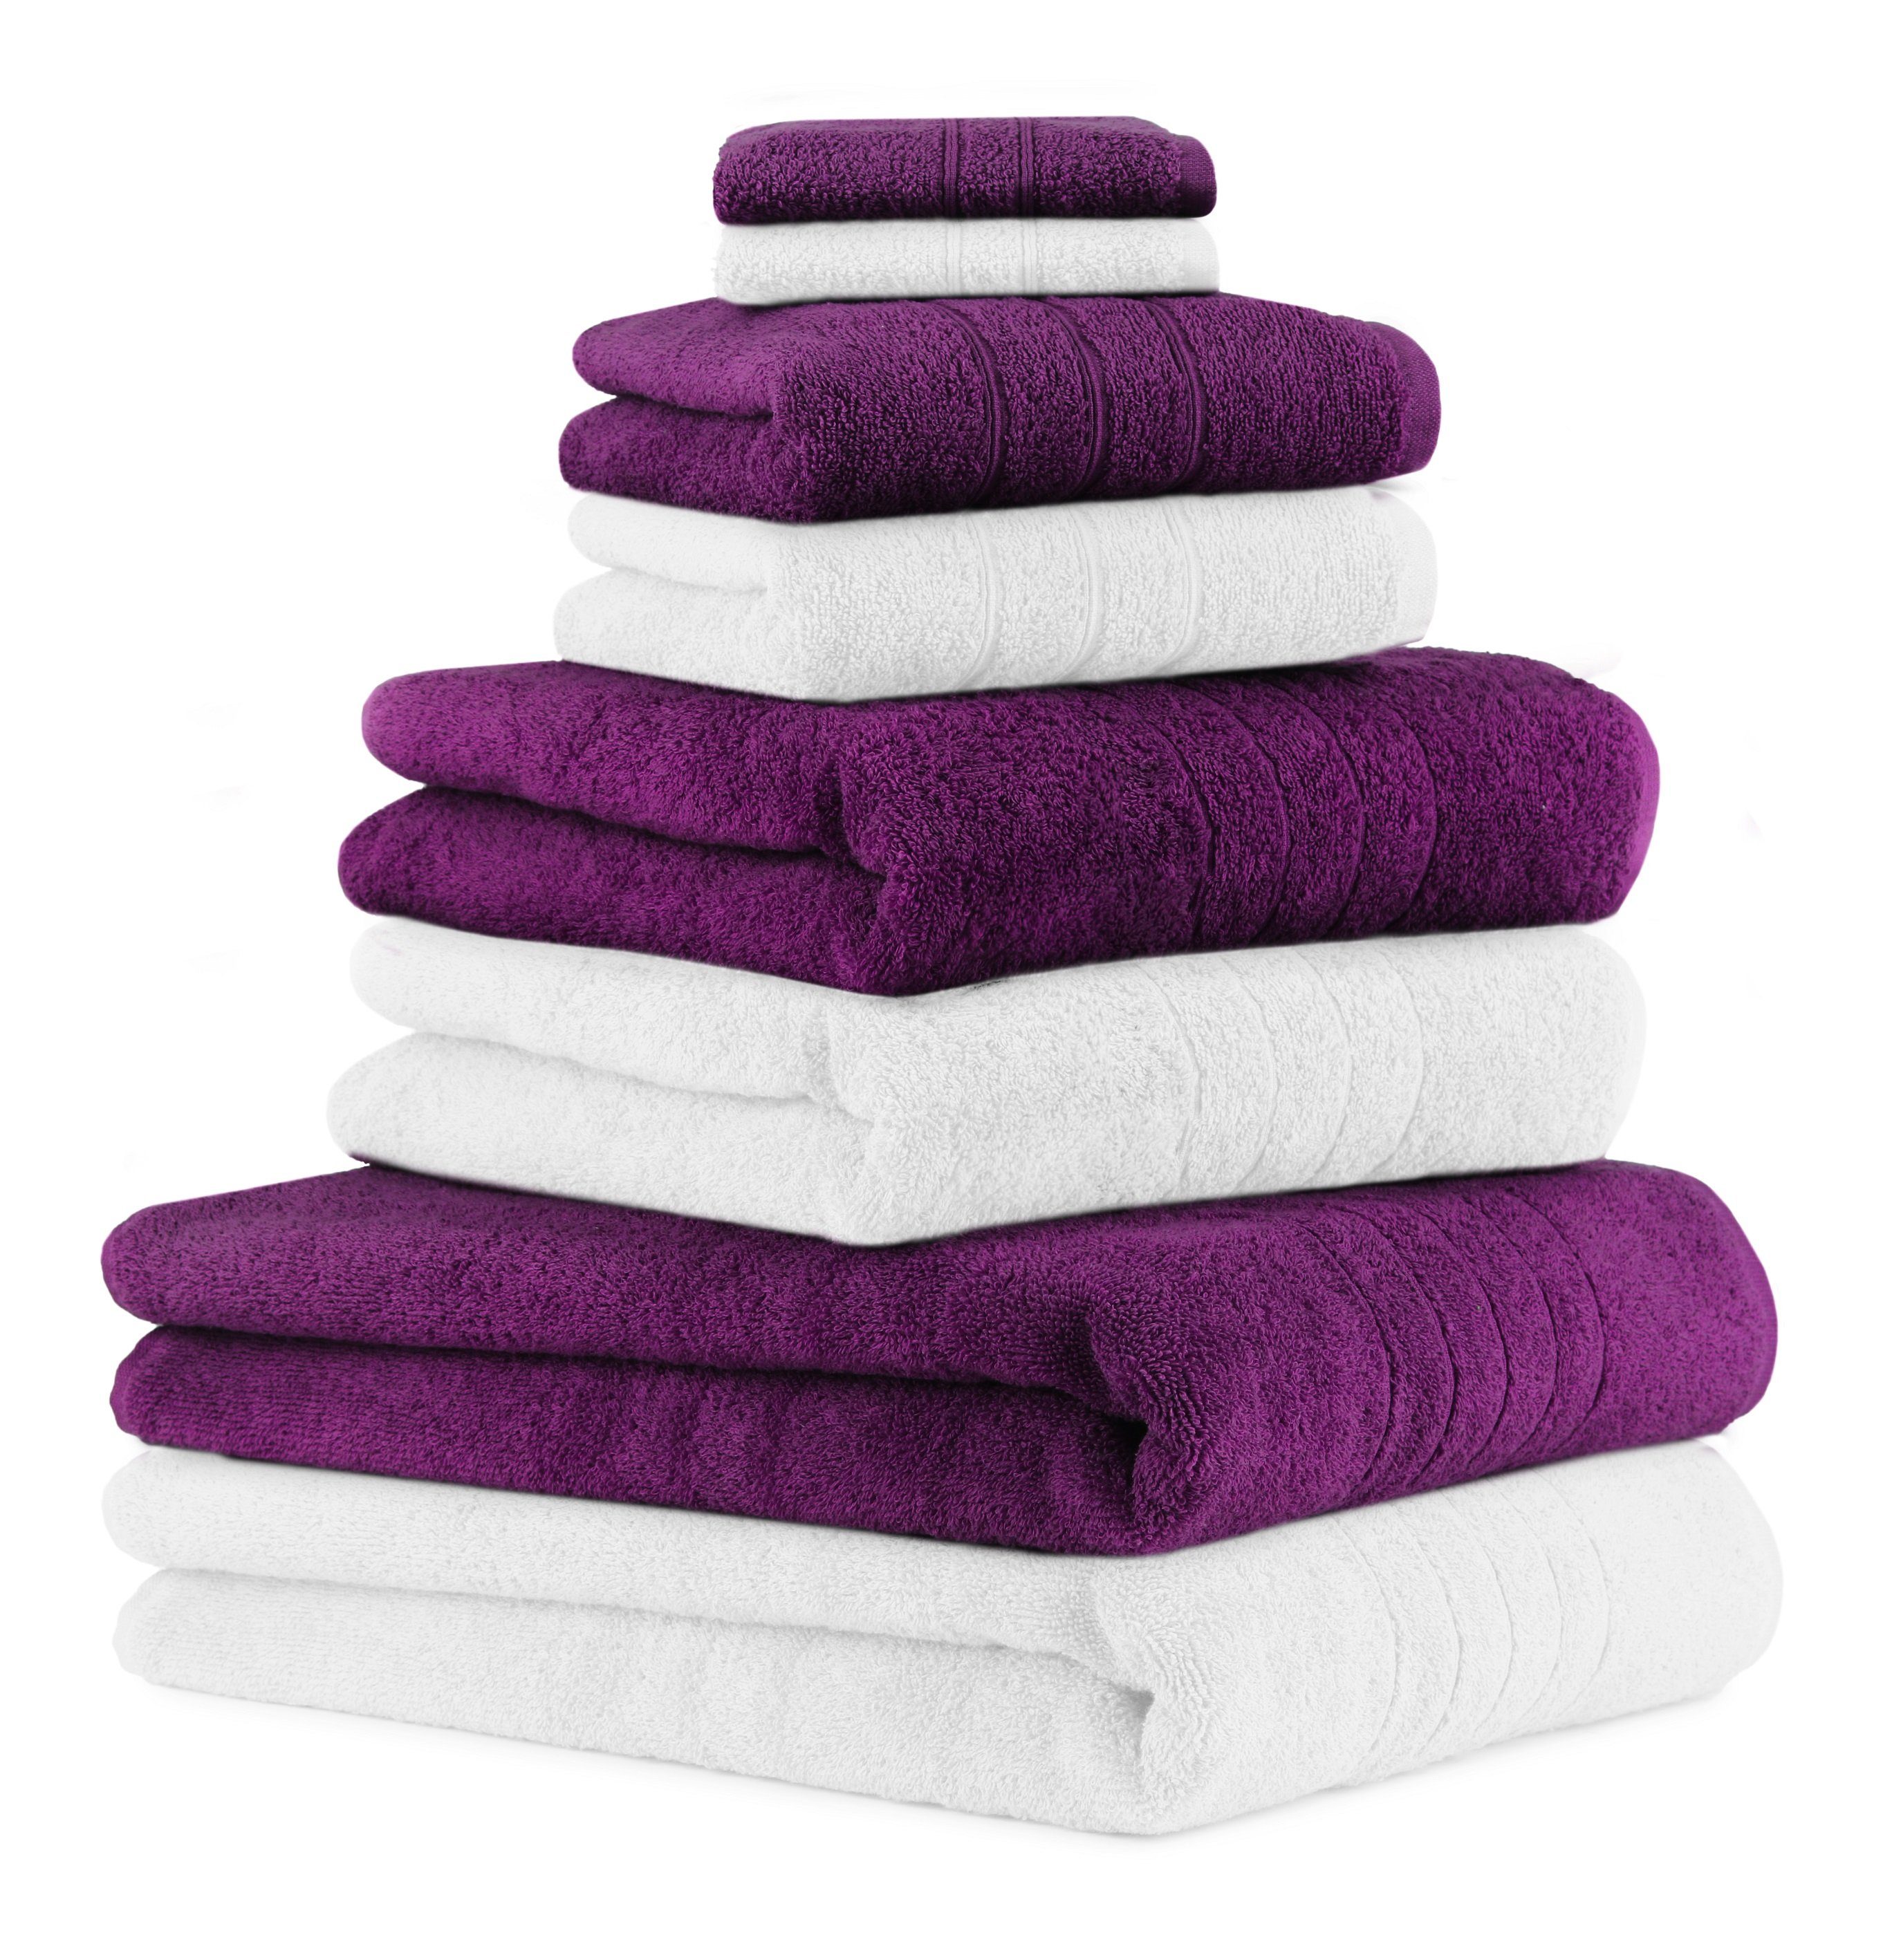 Betz Handtuch Set 8-TLG. Handtuch-Set Deluxe 100% Baumwolle 2 Badetücher 2 Duschtücher 2 Handtücher 2 Seiftücher Farbe weiß und Pflaume, 100% Baumwolle, (8-tlg)